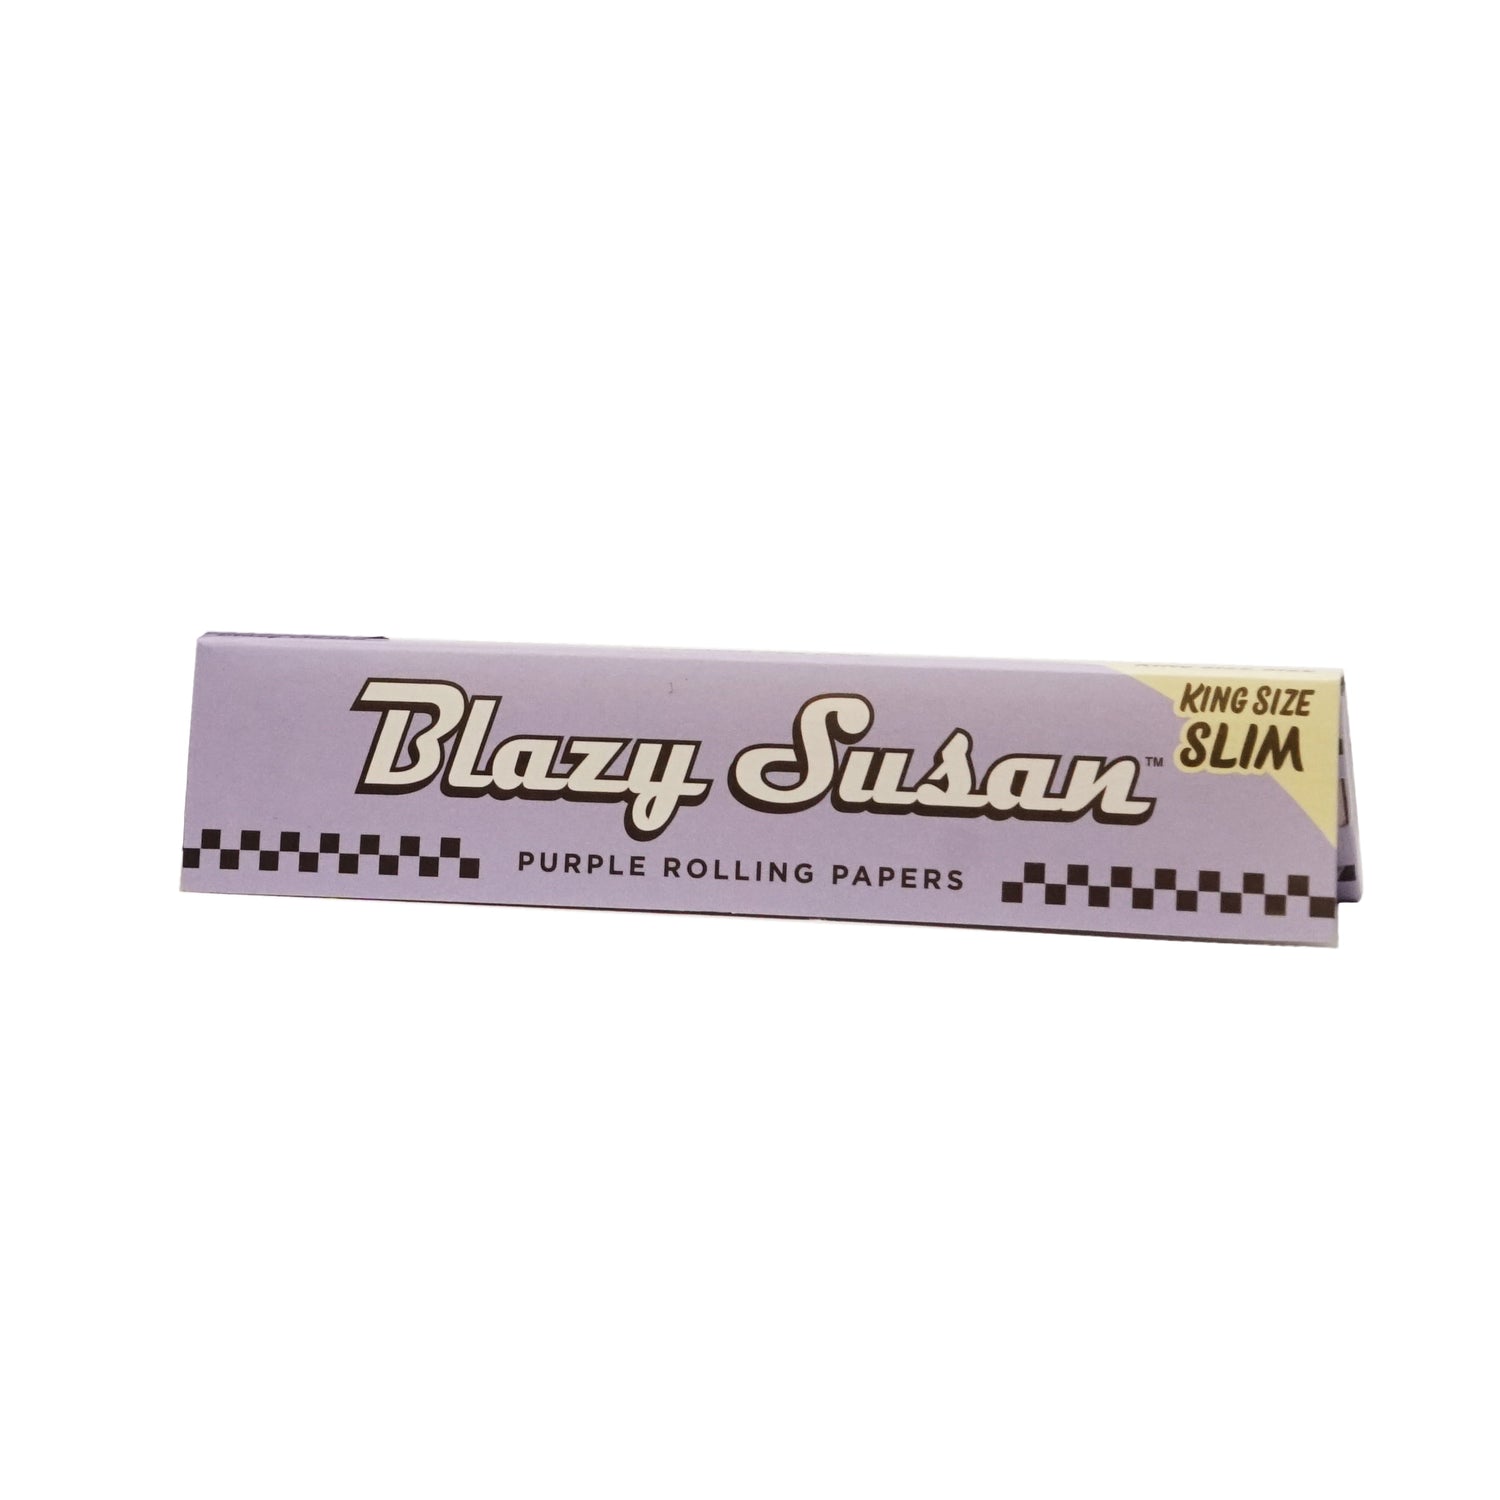 Blazy Susan - Vegan King Size Slim Purple Rolling Papers - Blazy Susan - Rolling Papers - Rolling Refills